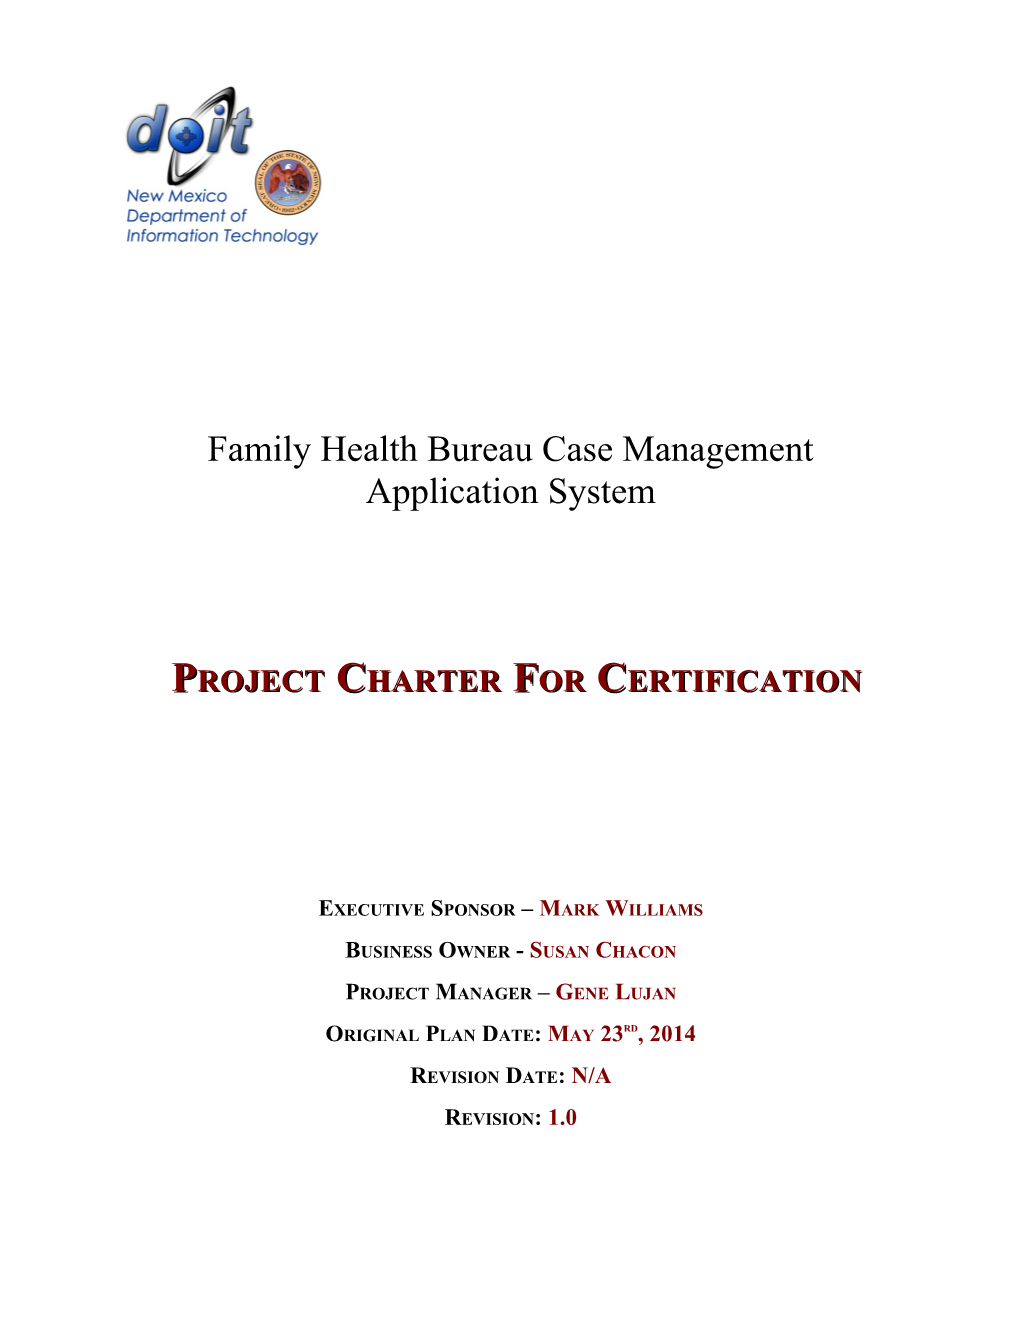 Family Health Bureau Case Management Application System